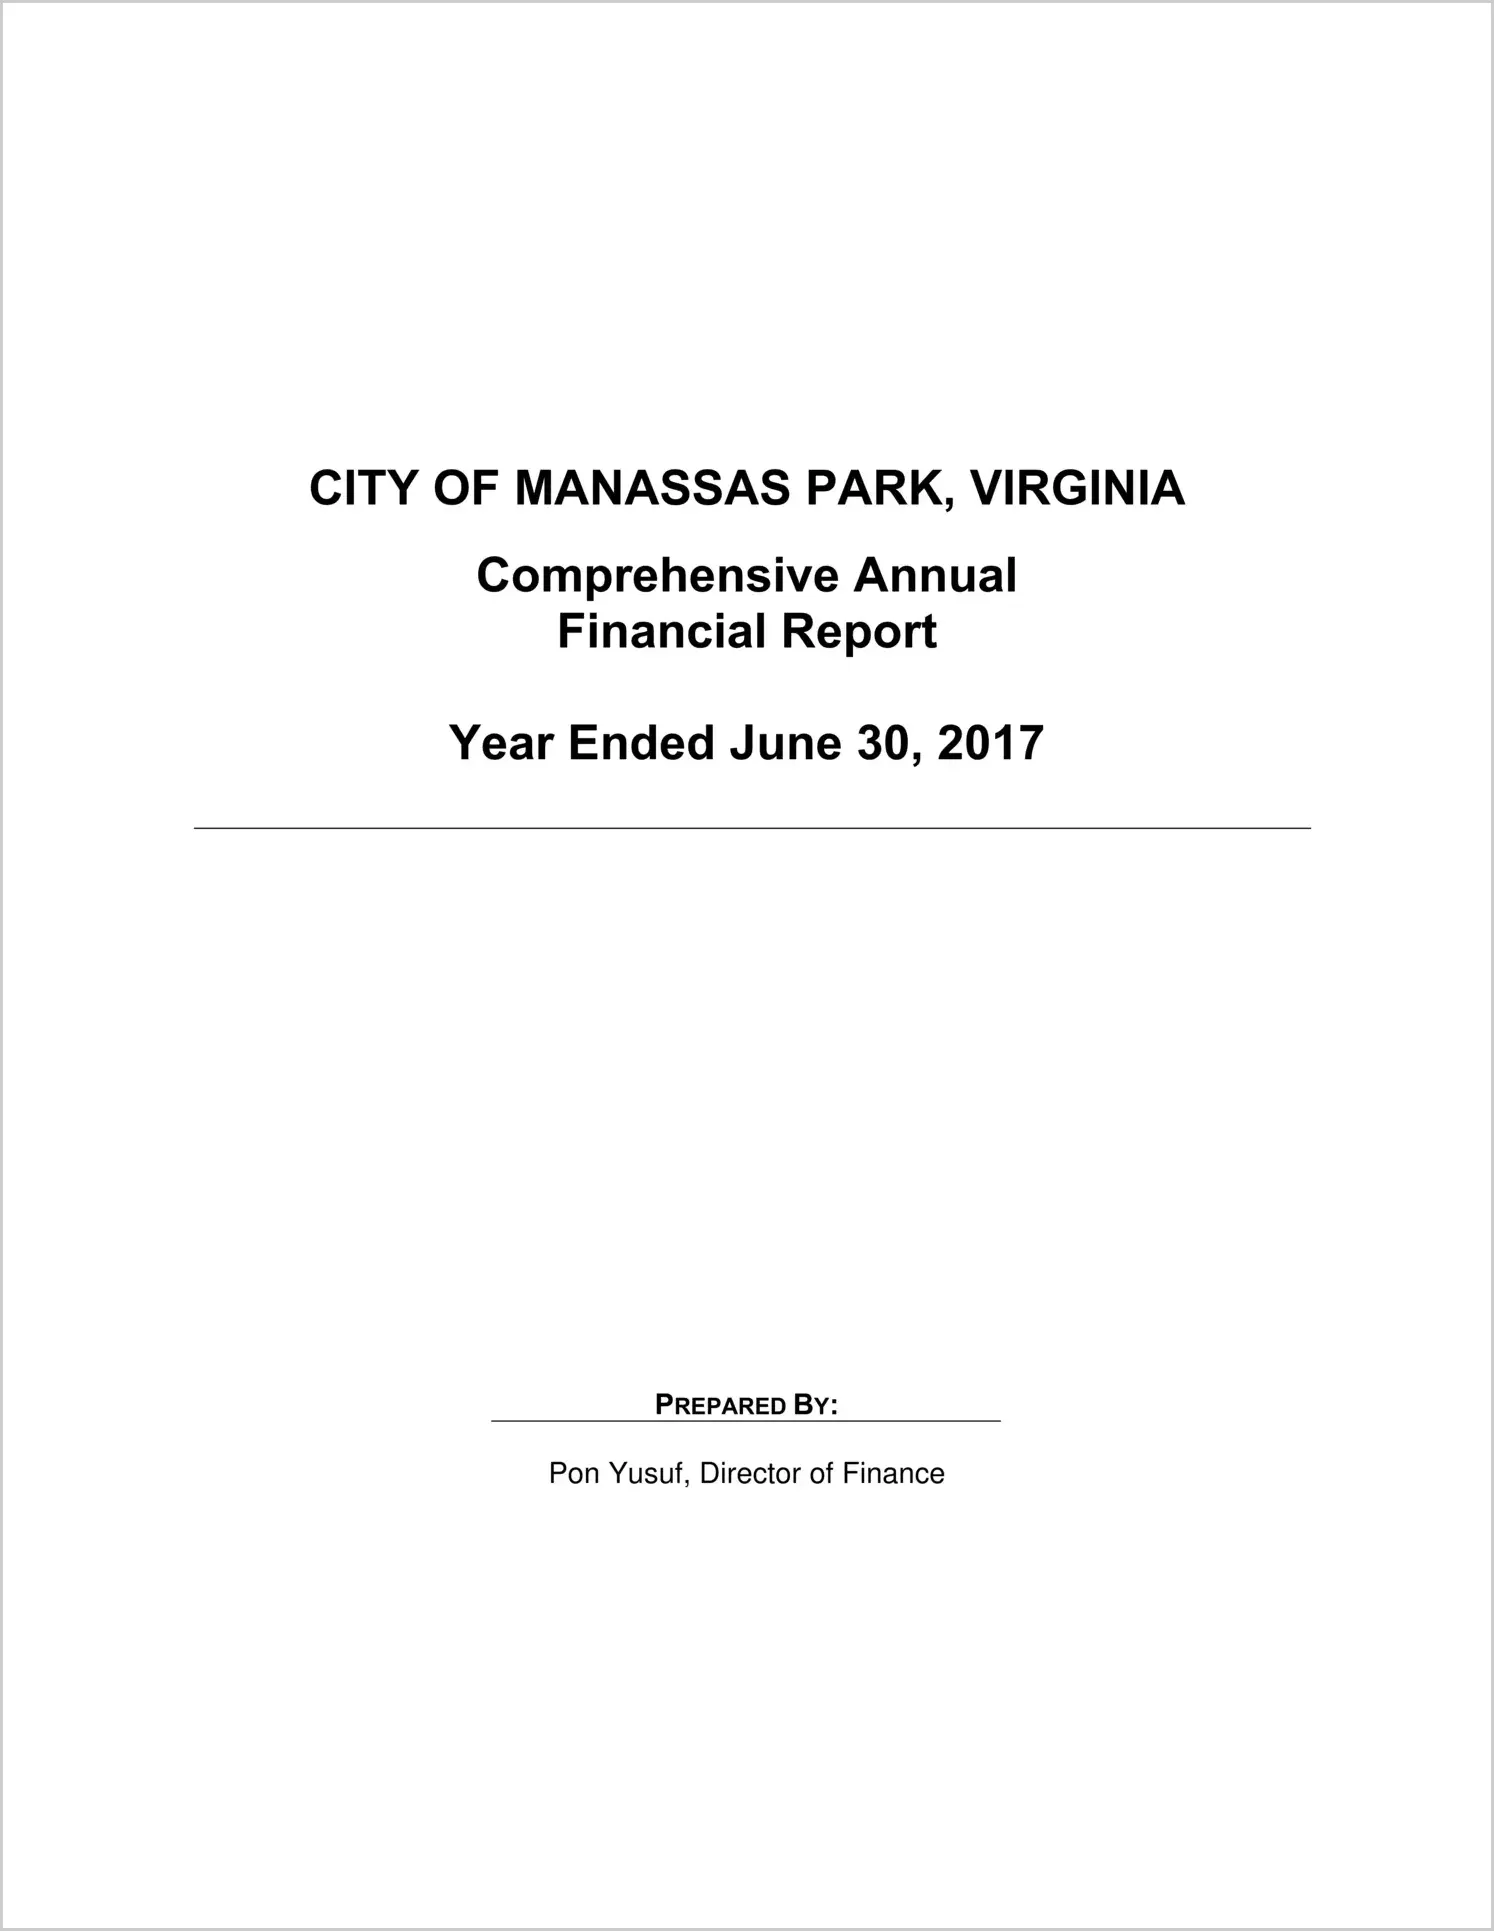 2017 Annual Financial Report for City of Manassas Park